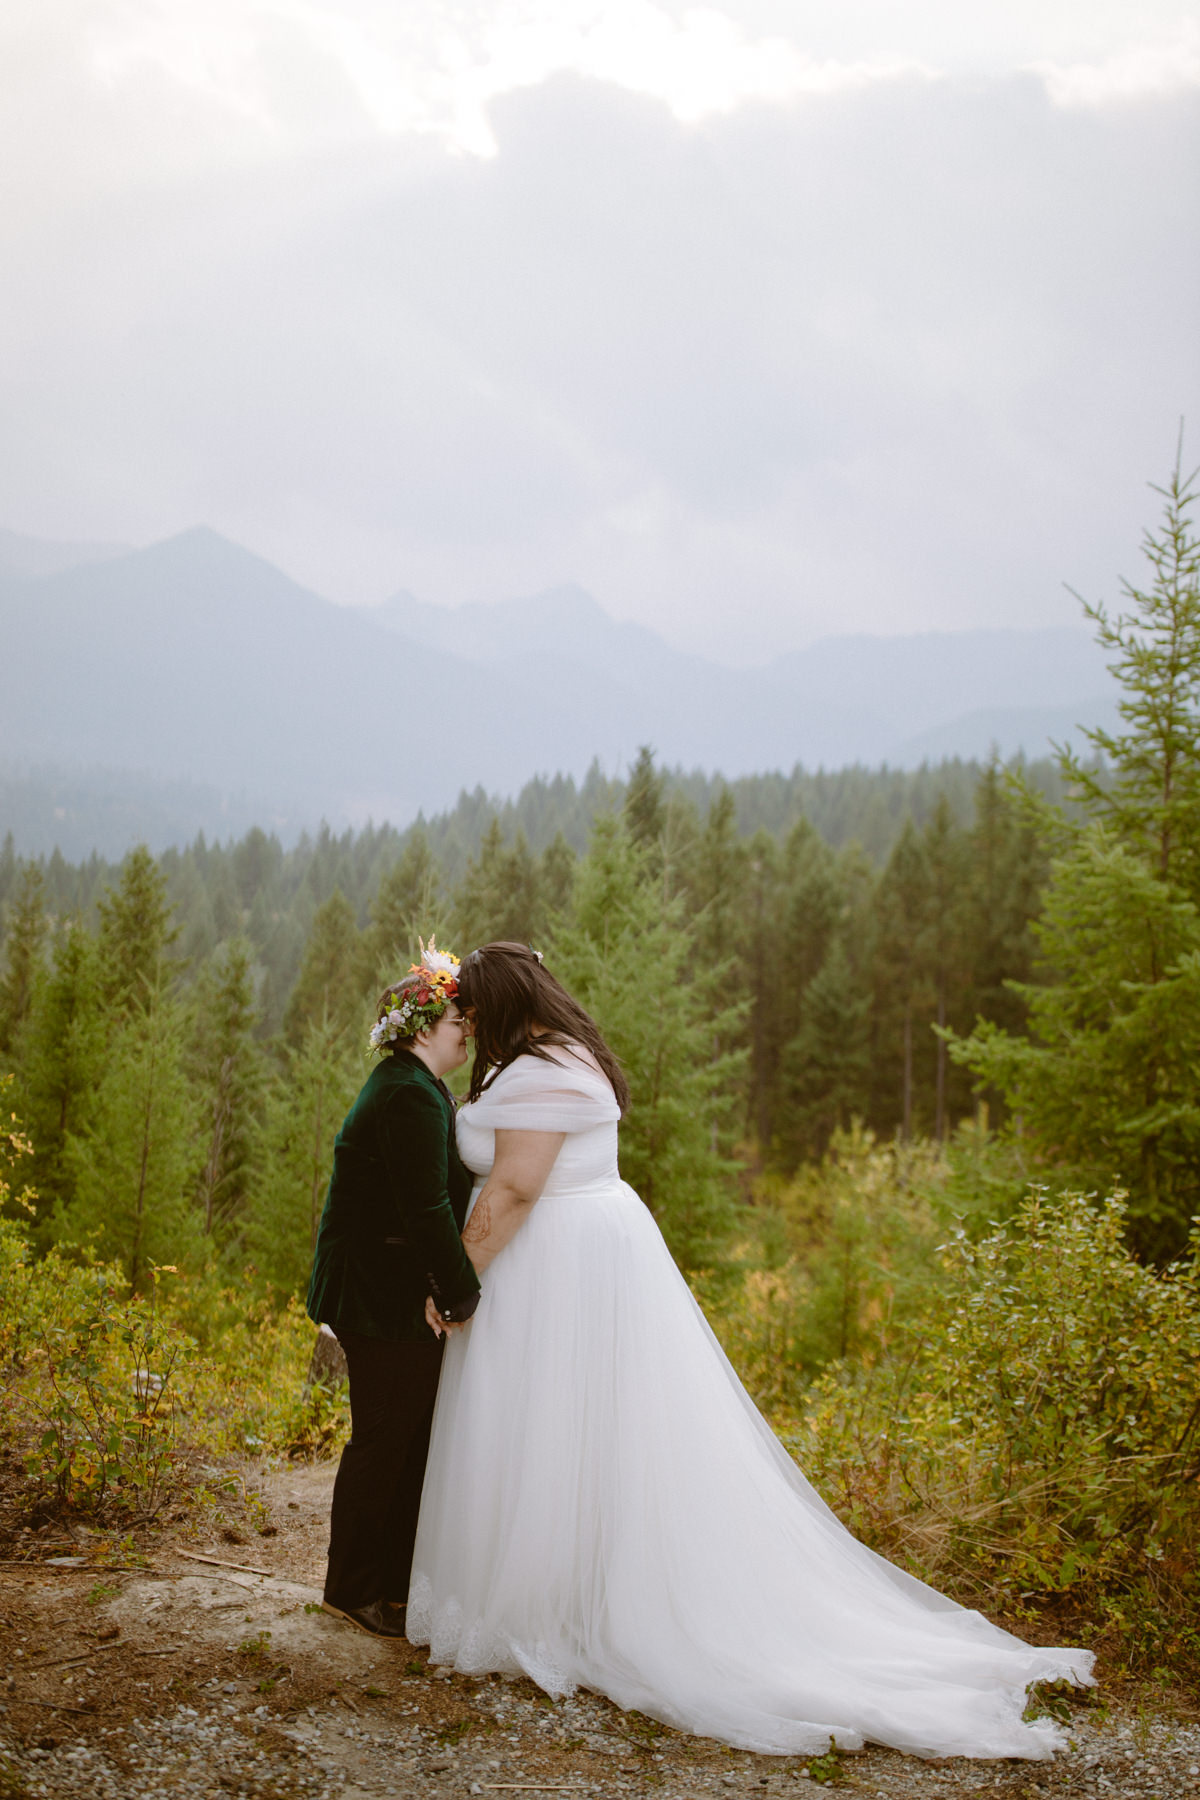 LGBTQ-friendly Golden wedding photography near Mokki Mountain